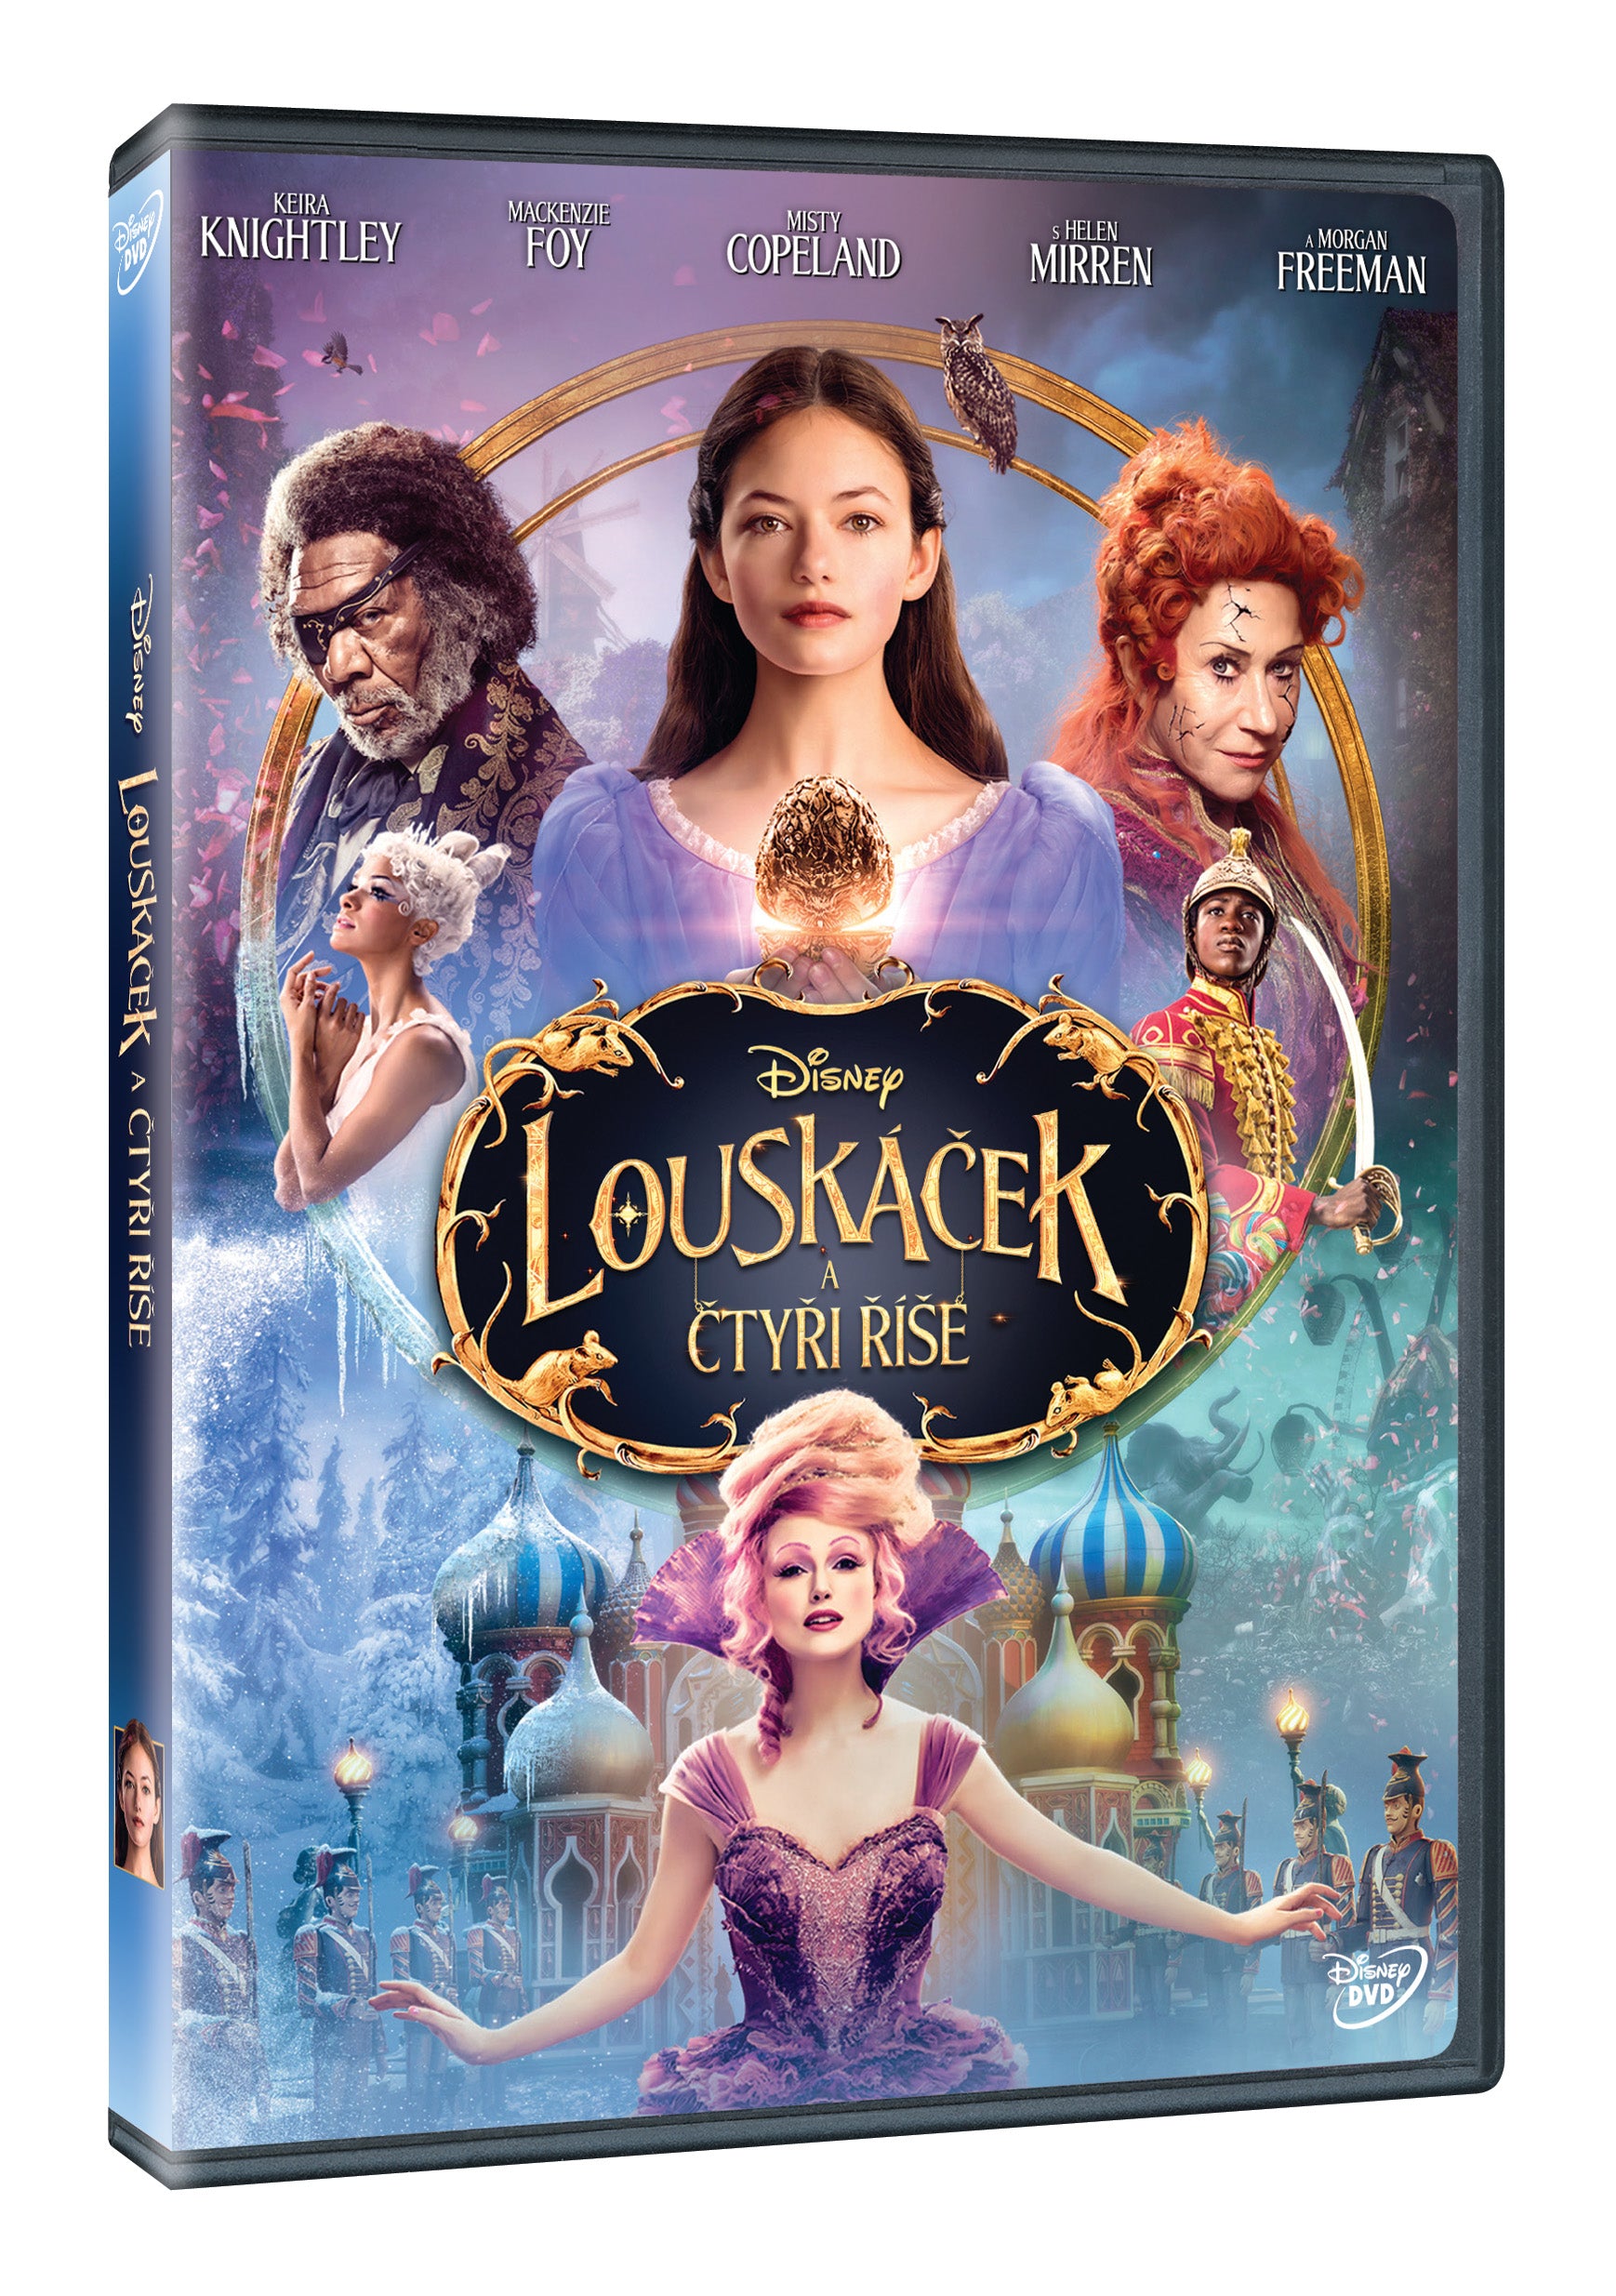 Louskacek a ctyri rise DVD / The Nutcracker and the Four Realms